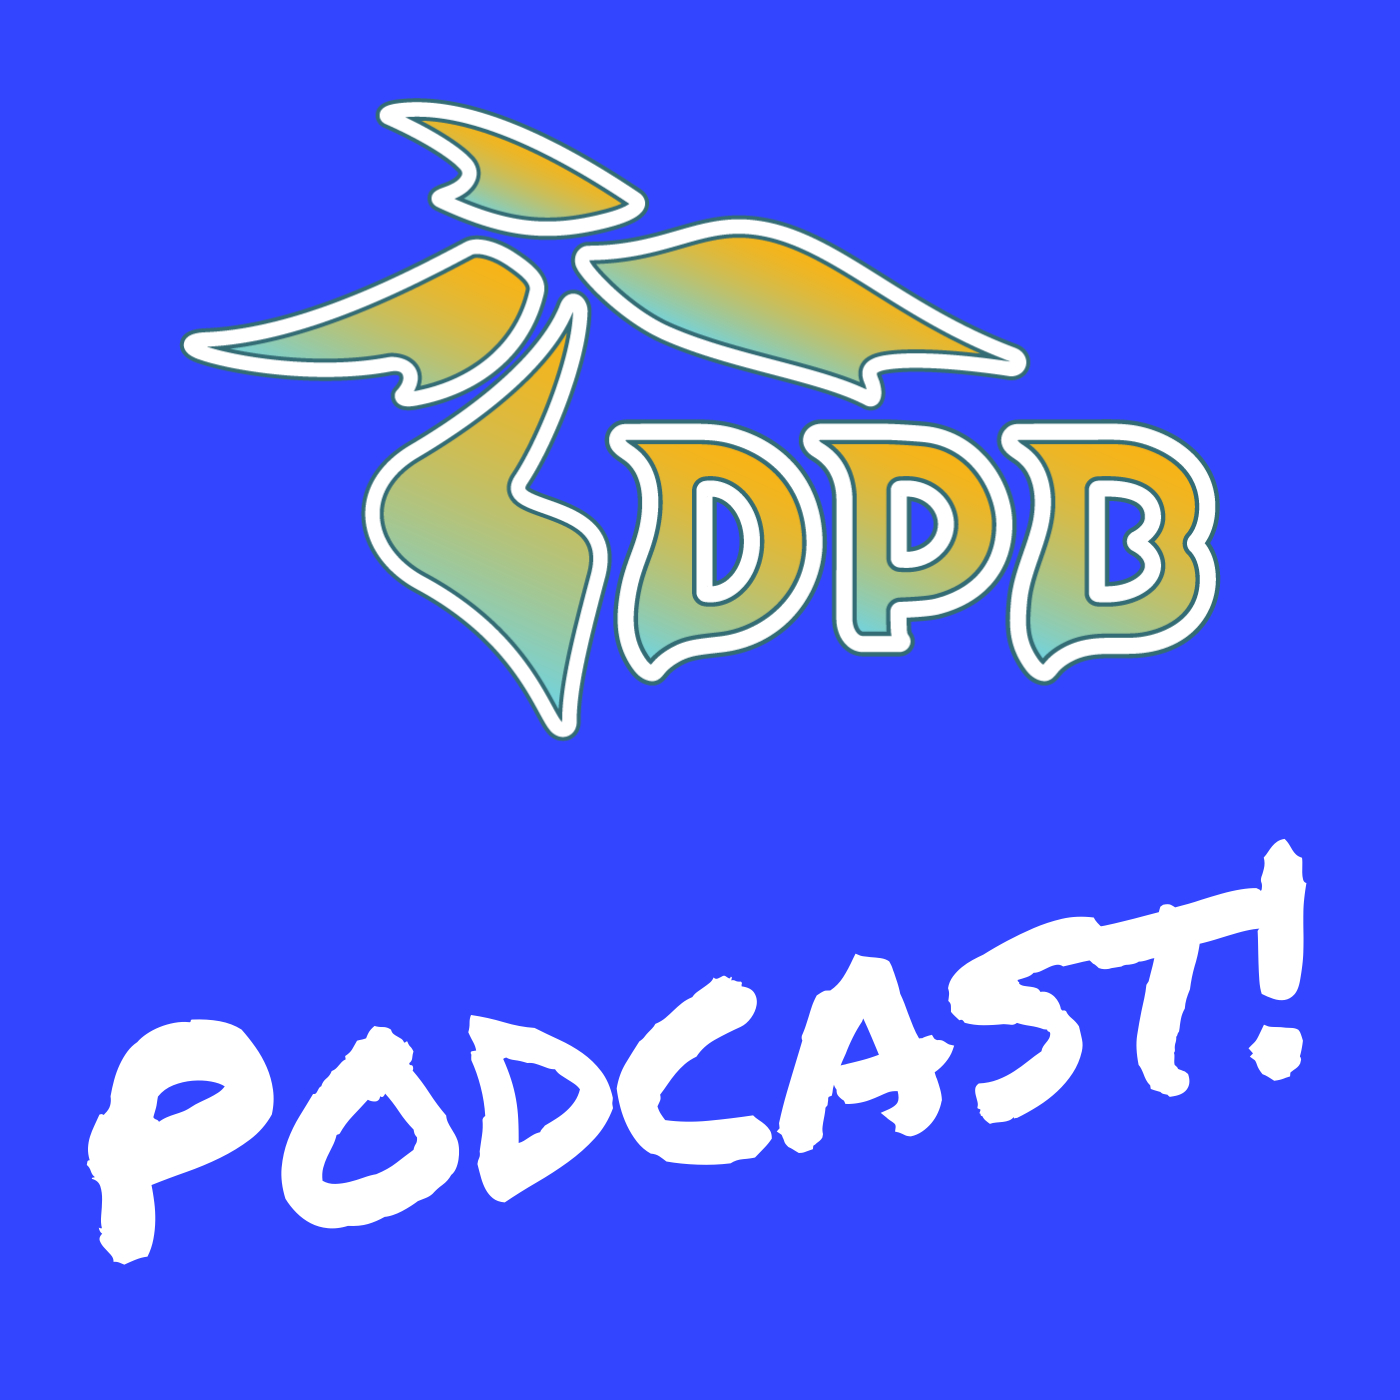 DPB Podcast